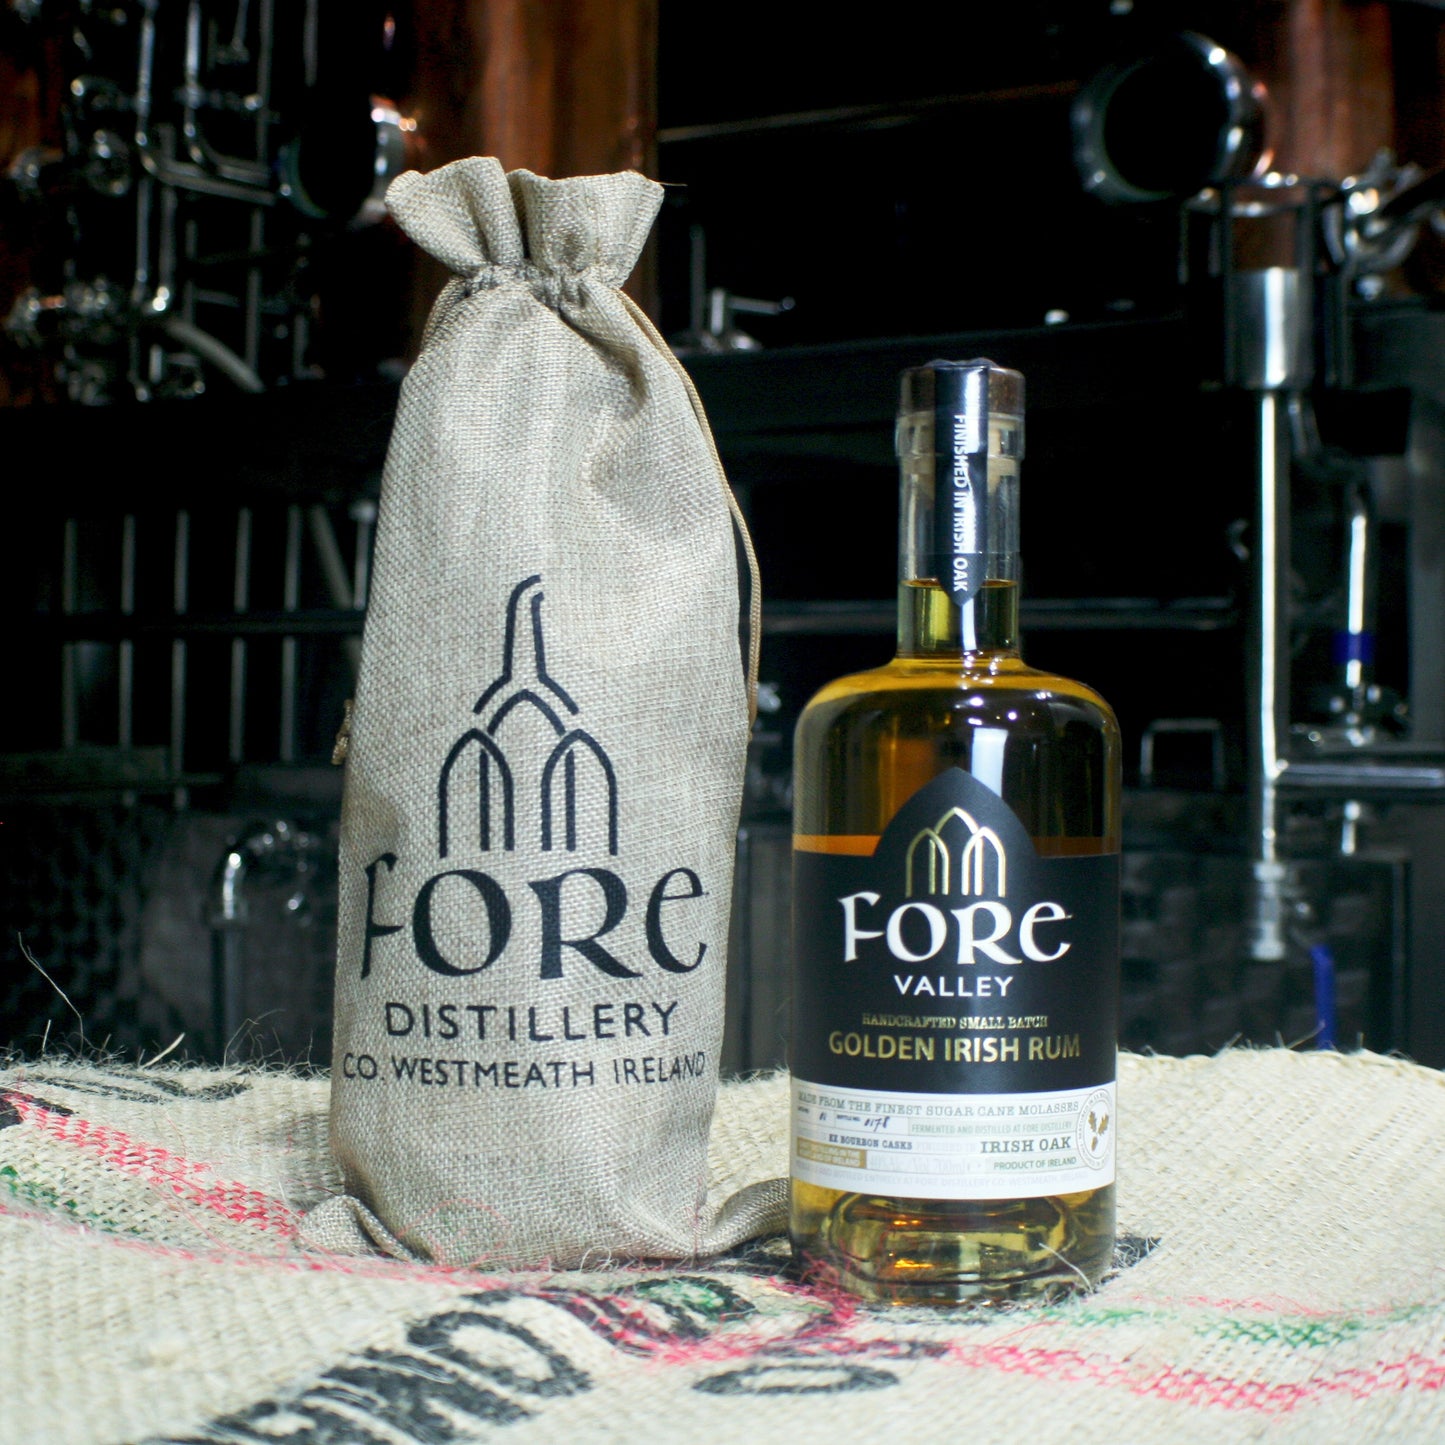 Fore Valley | Golden Irish Rum